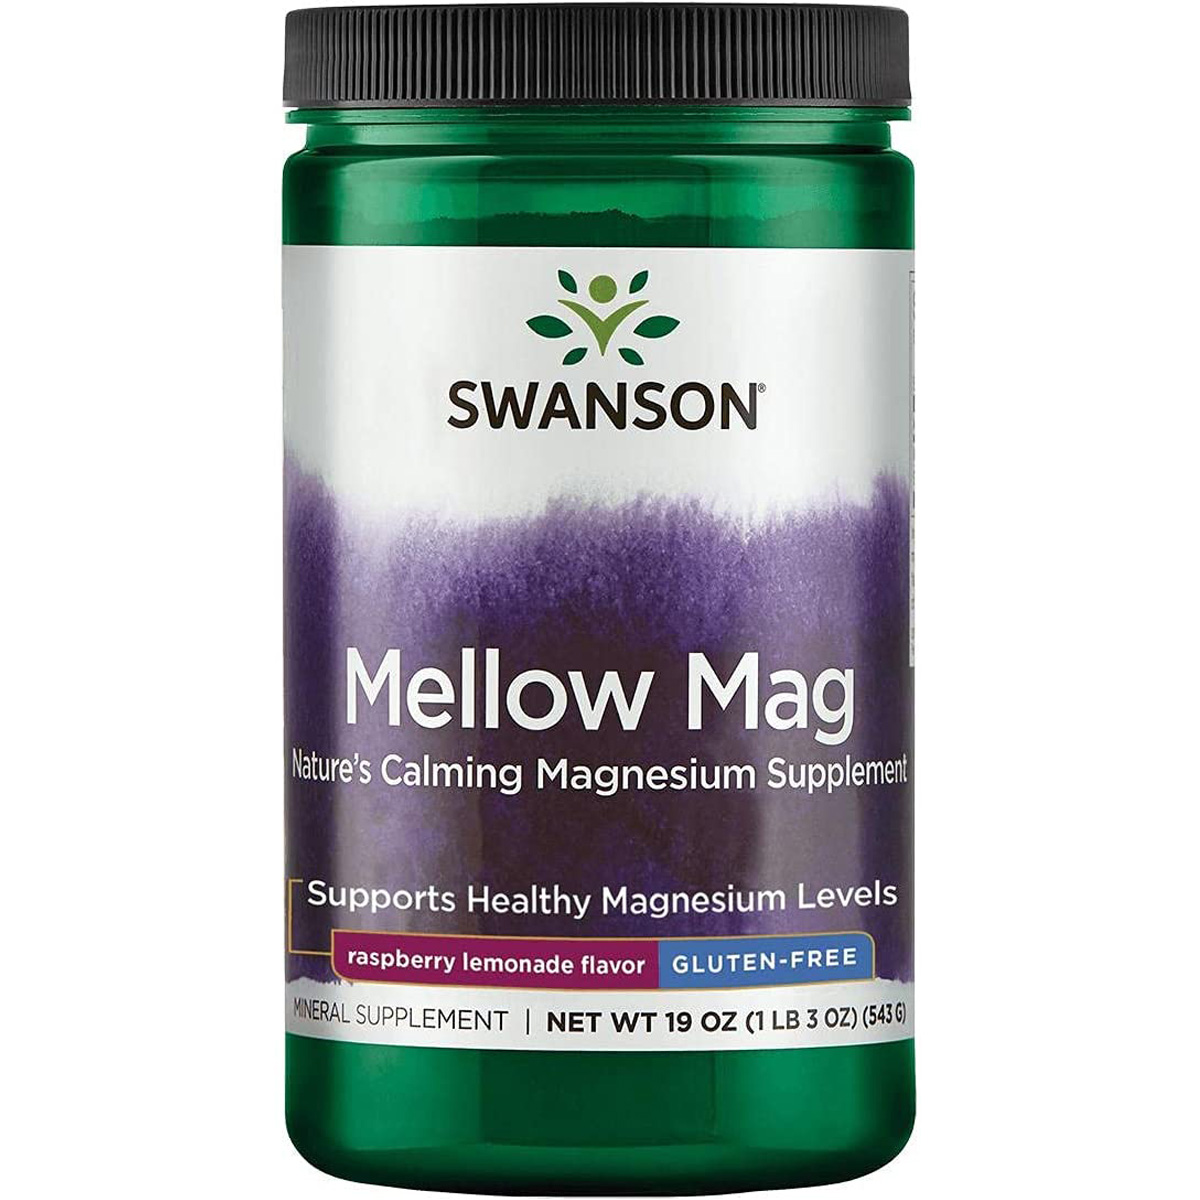 Swanson Mellow Mag, Raspberry Lemonade, 1LB